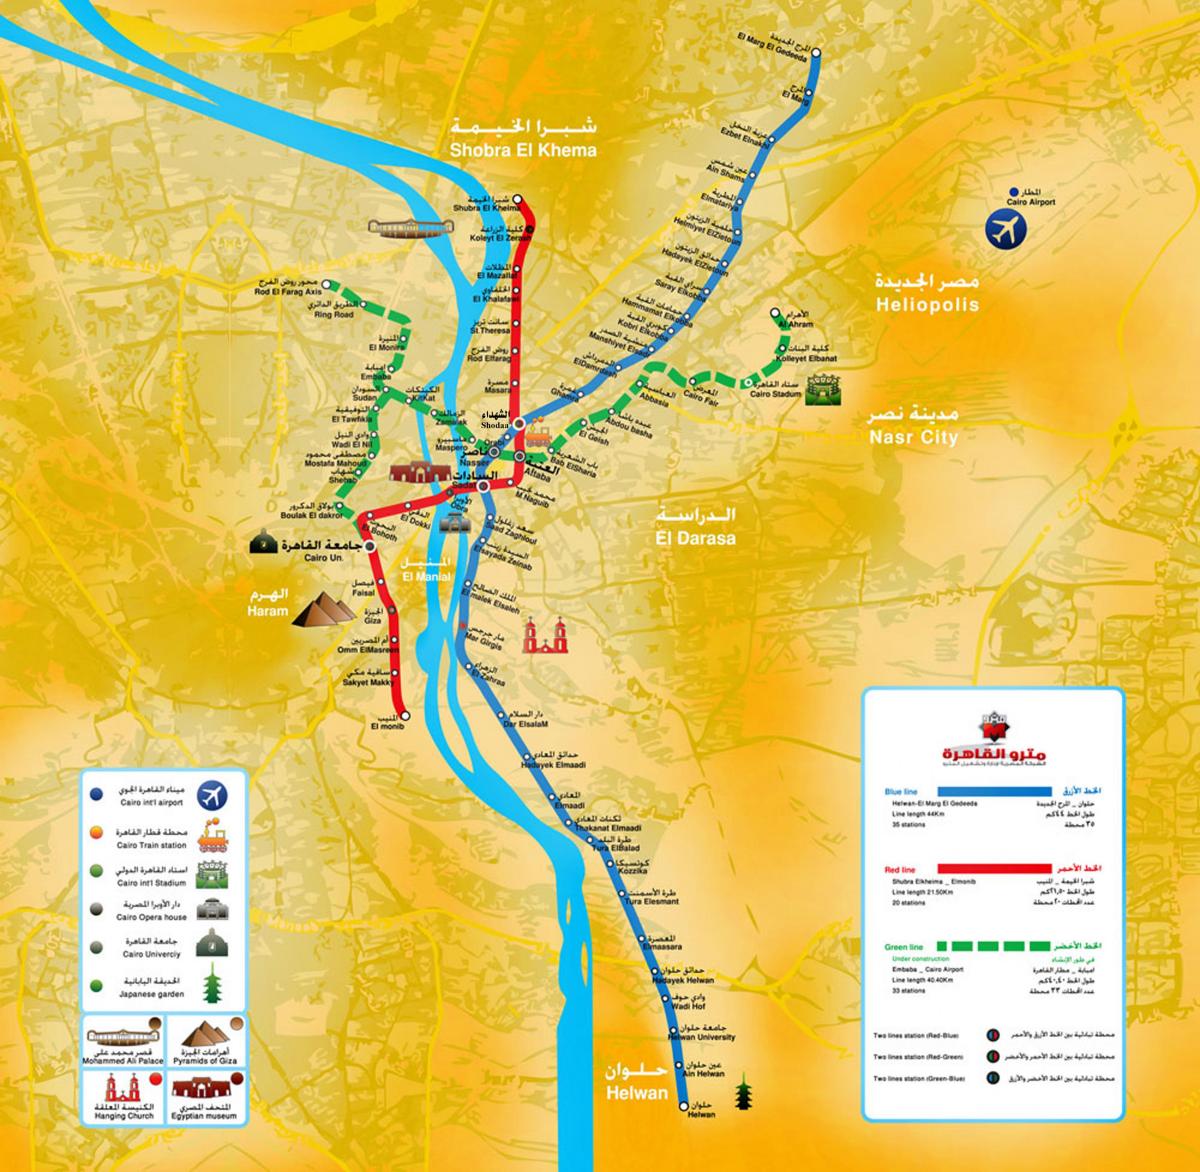 Cairo railway stations map